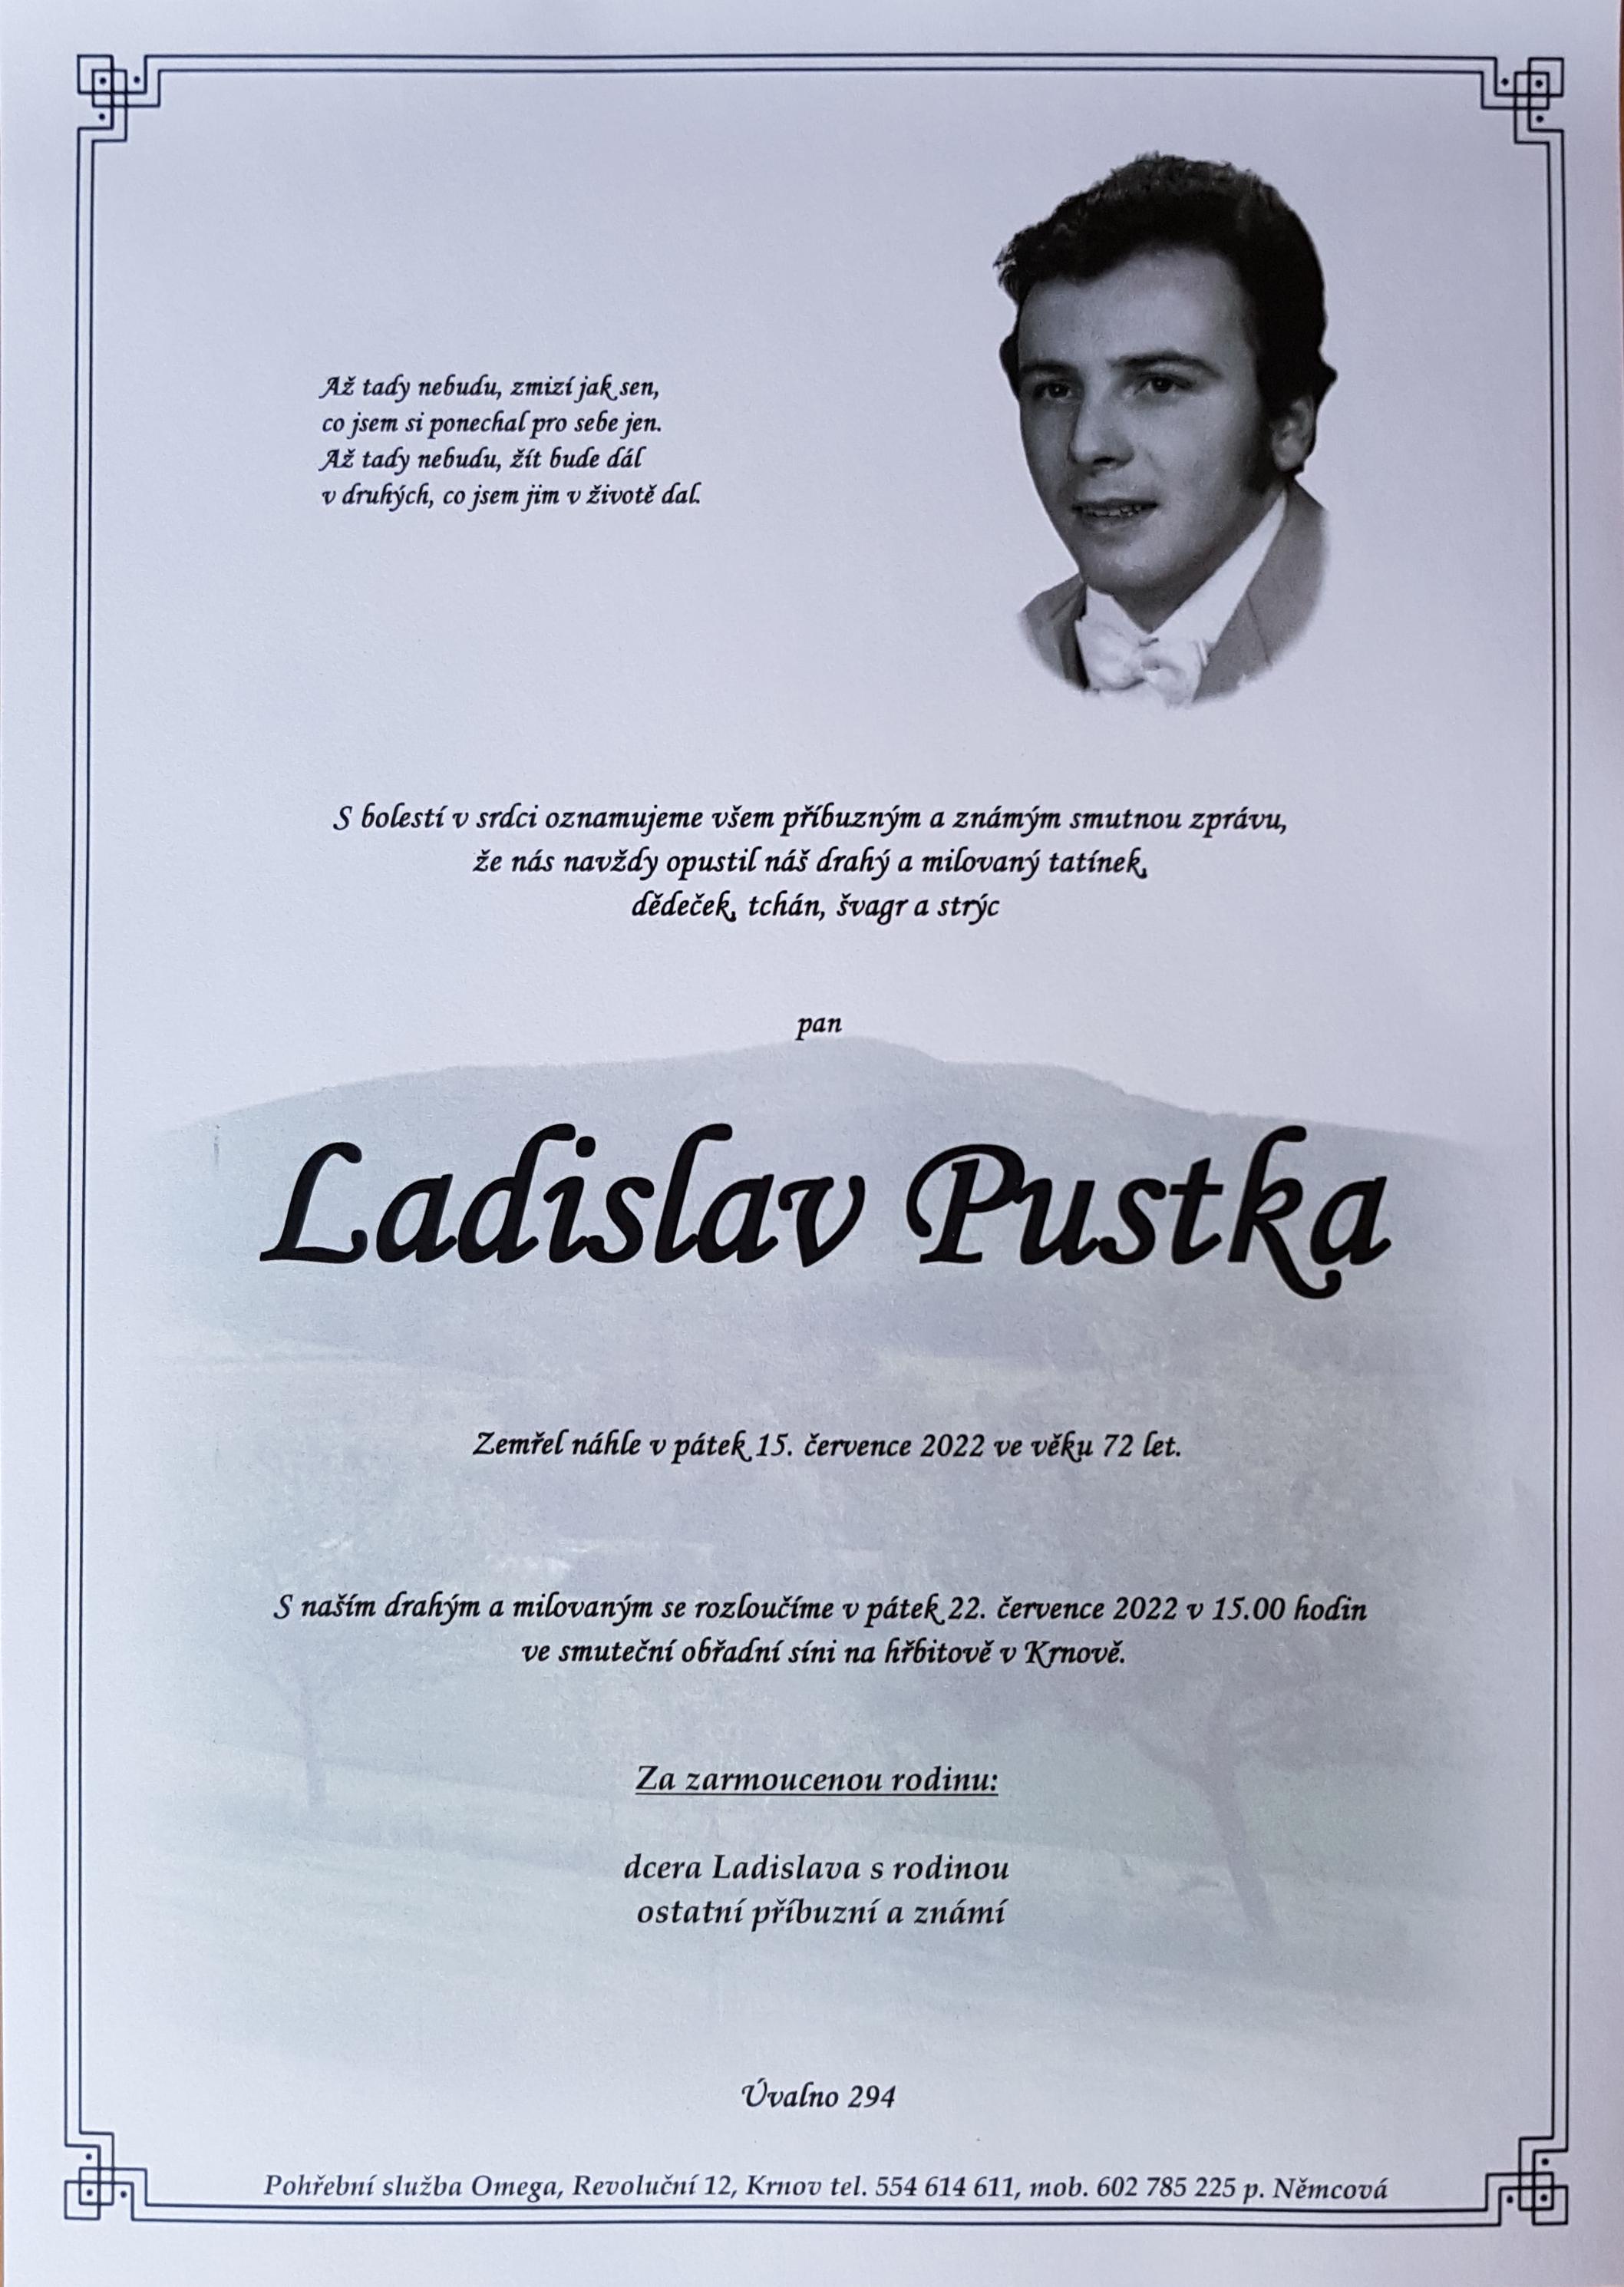 Ladislav Pustka